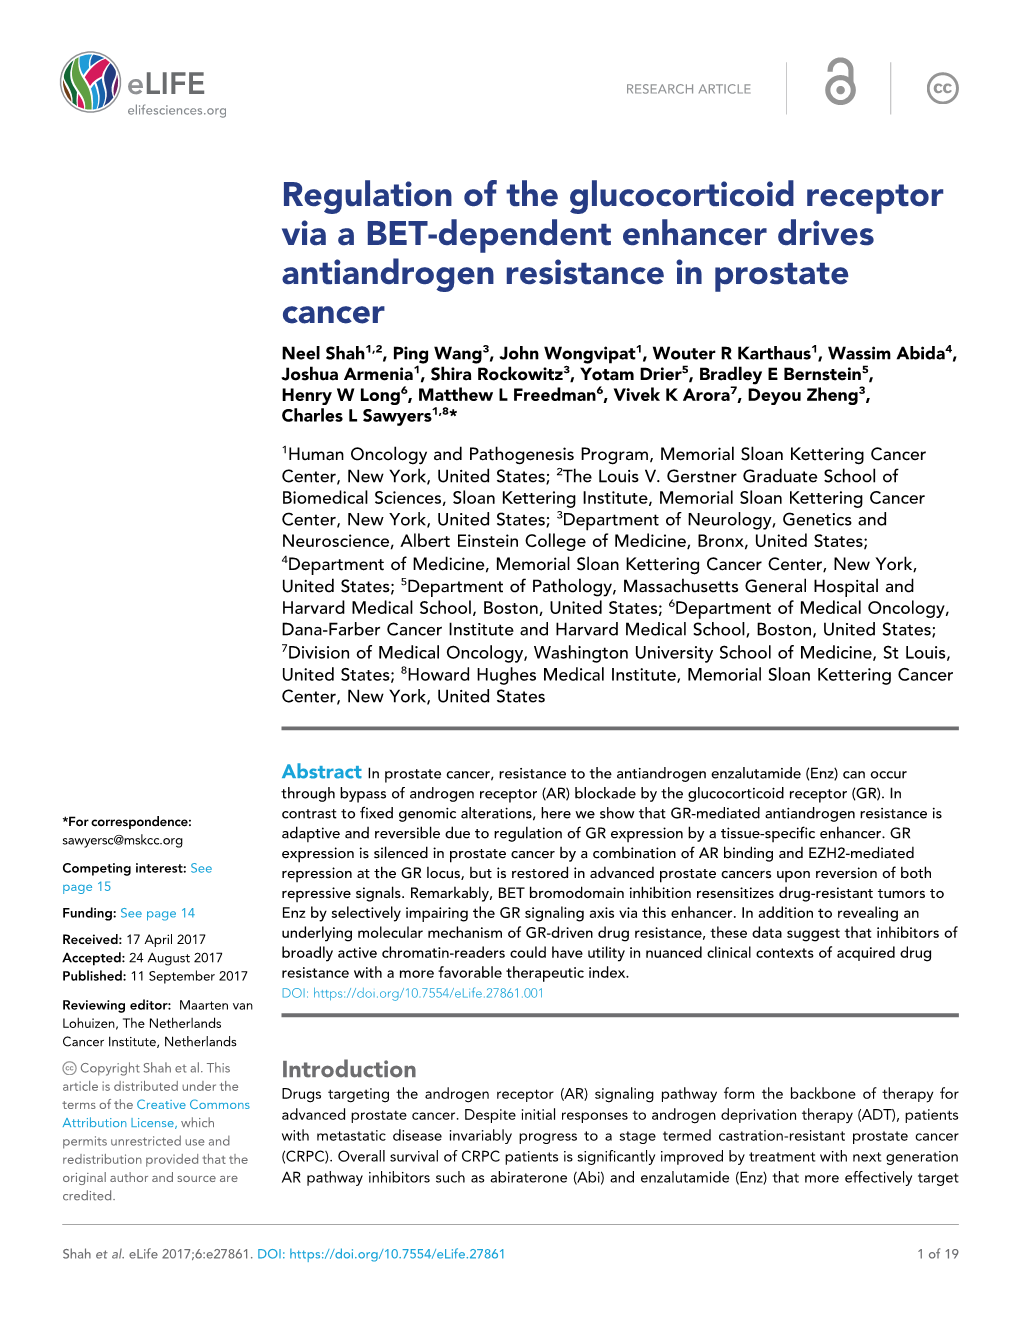 Regulation of the Glucocorticoid Receptor Via a BET